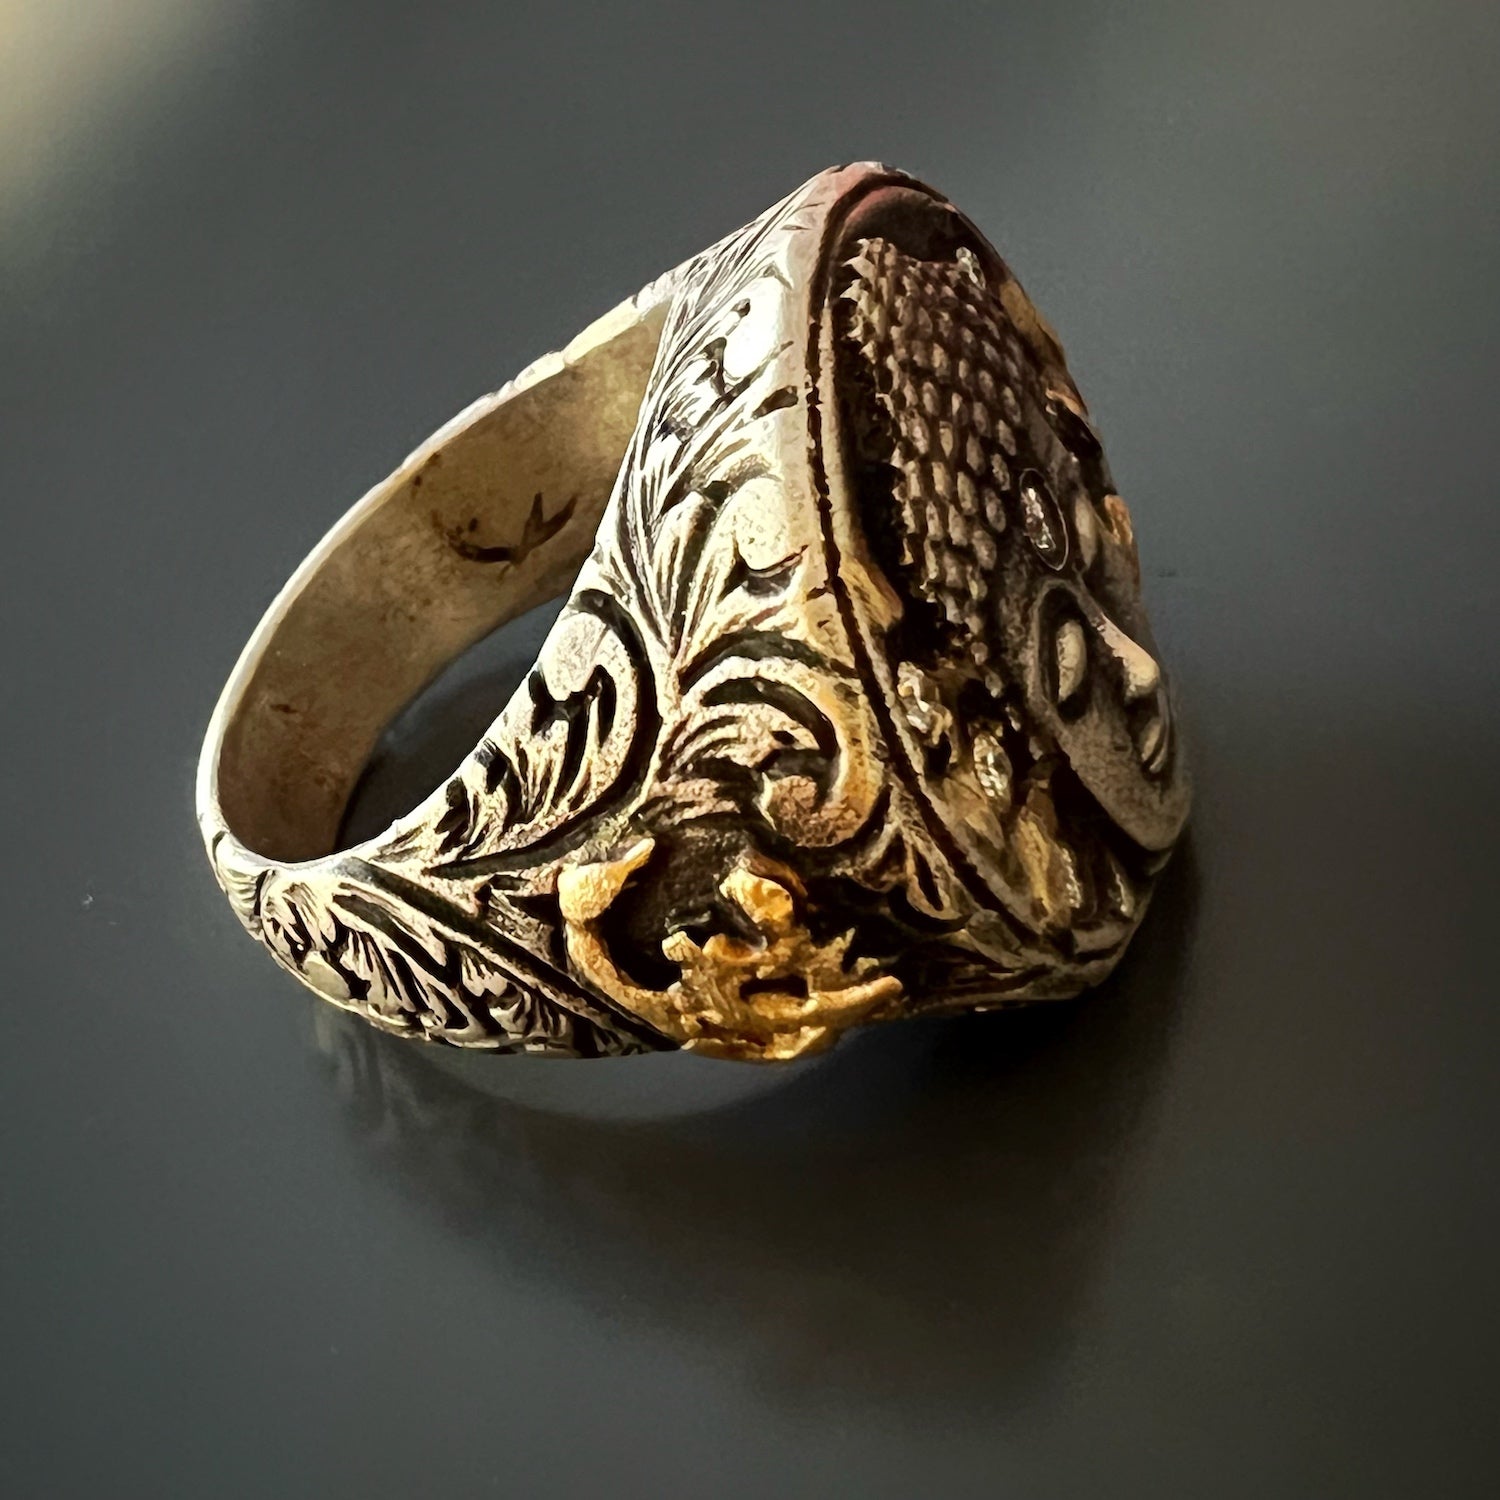 Spiritual and Stylish - Gold and Diamond Buddha Ring for All.